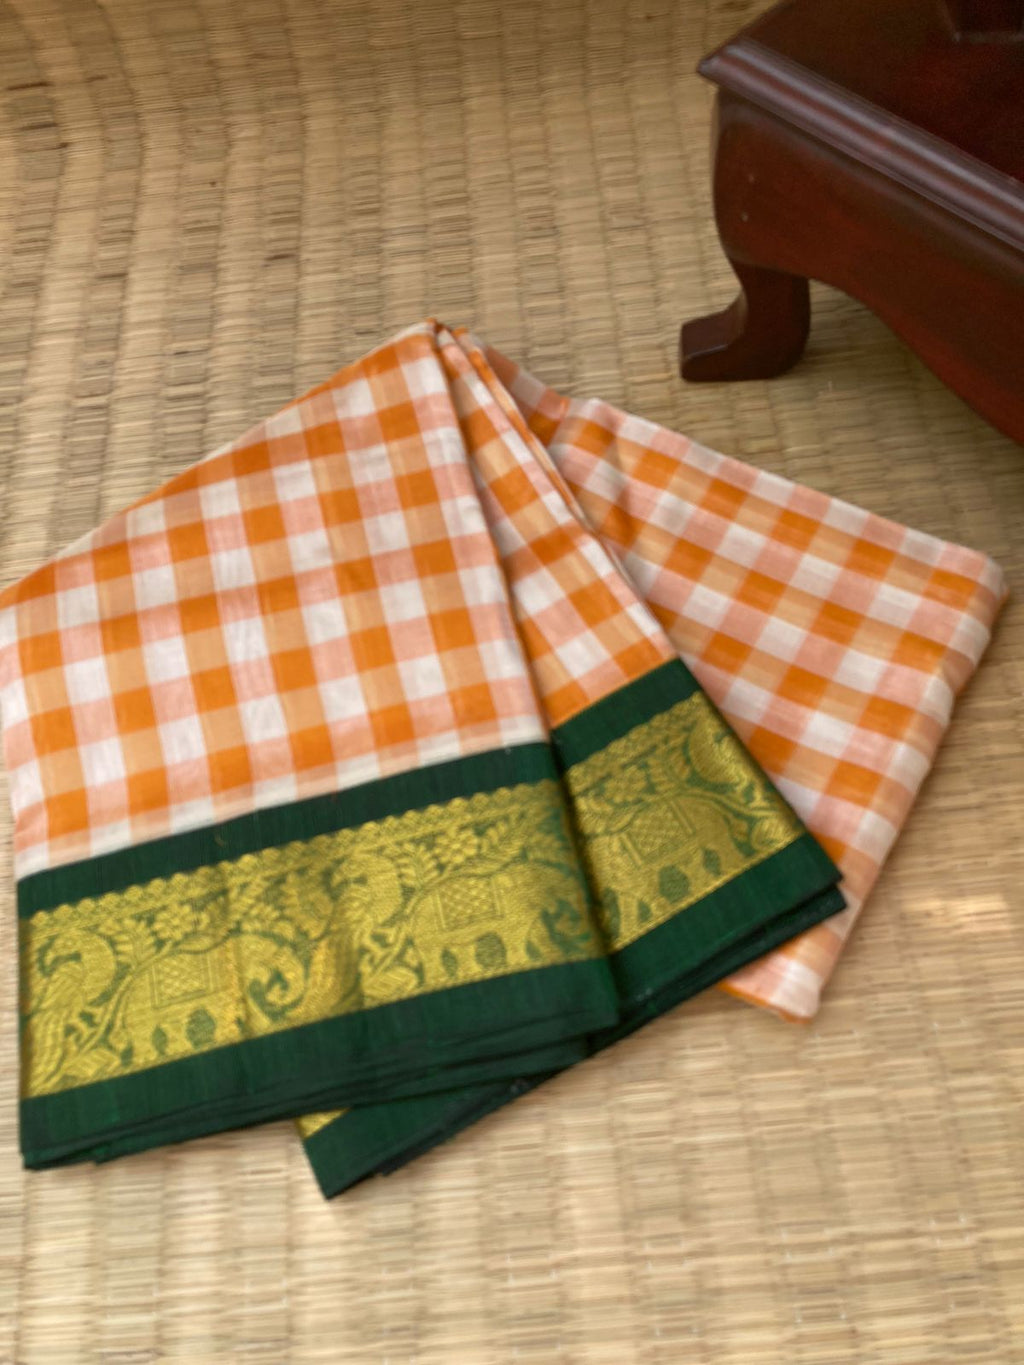 Paalum Palamum Kattams Korvai Silk Cottons - off white and orange with Meenakshi green